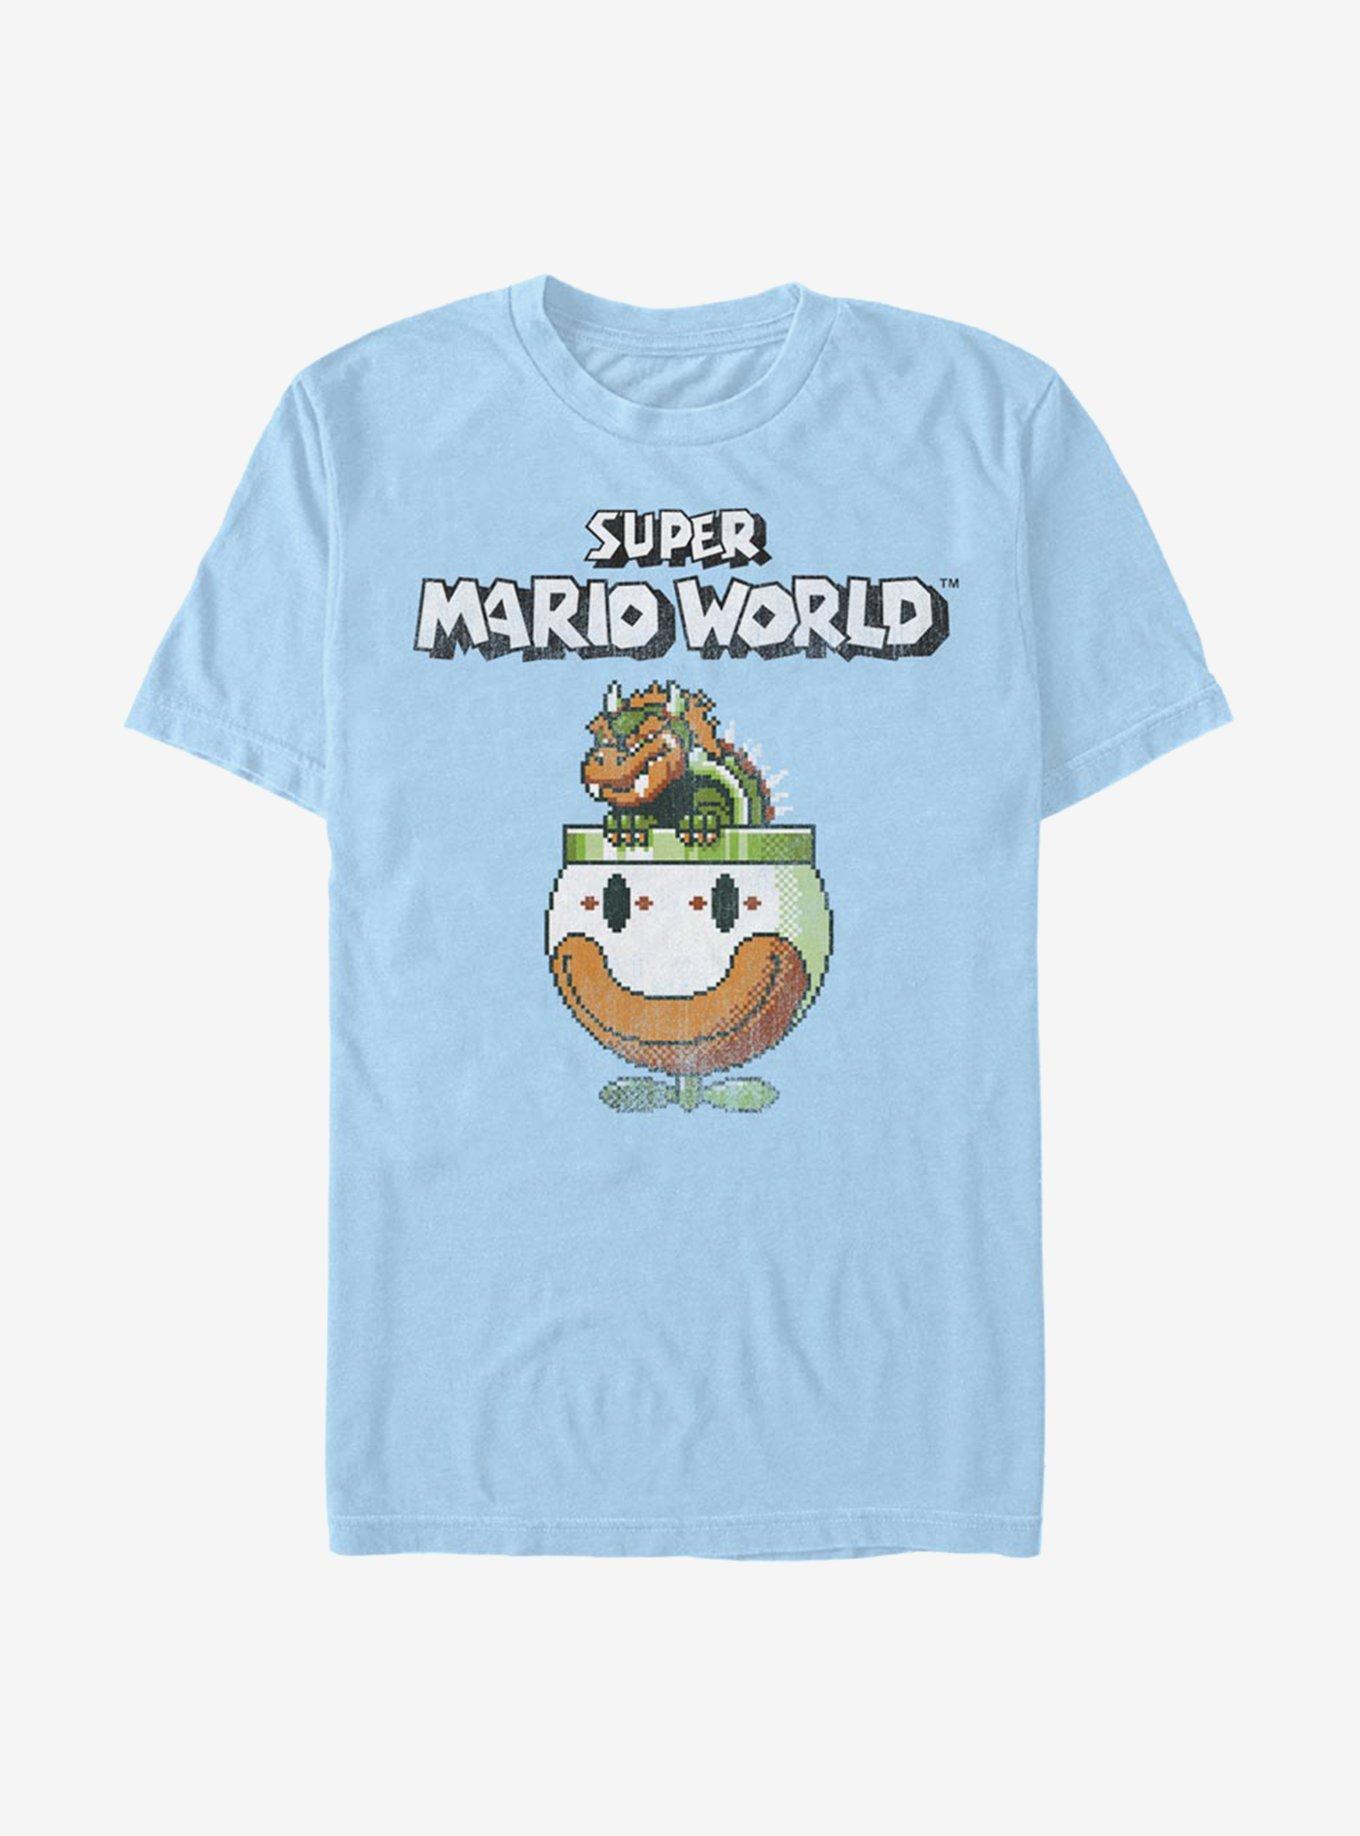 Super Mario Bowser Is King T-Shirt